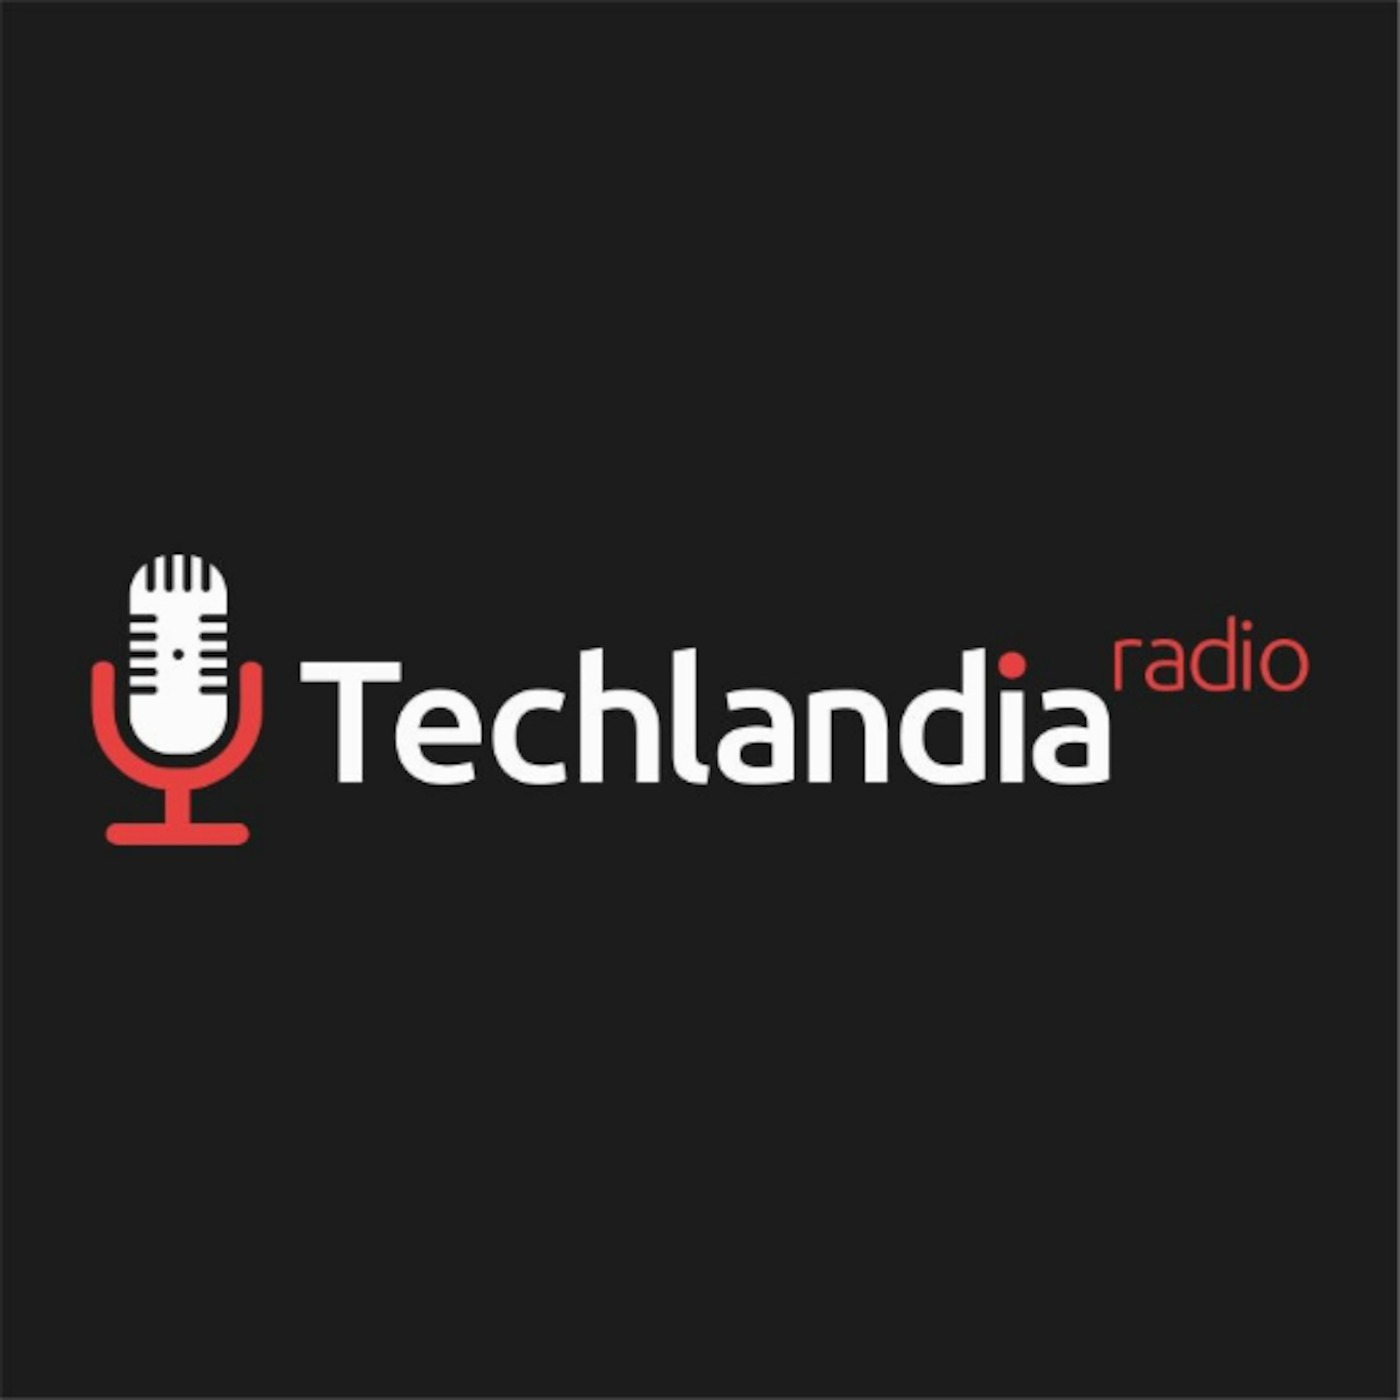 Episode 58: Techlandia - Ready for Winter Break